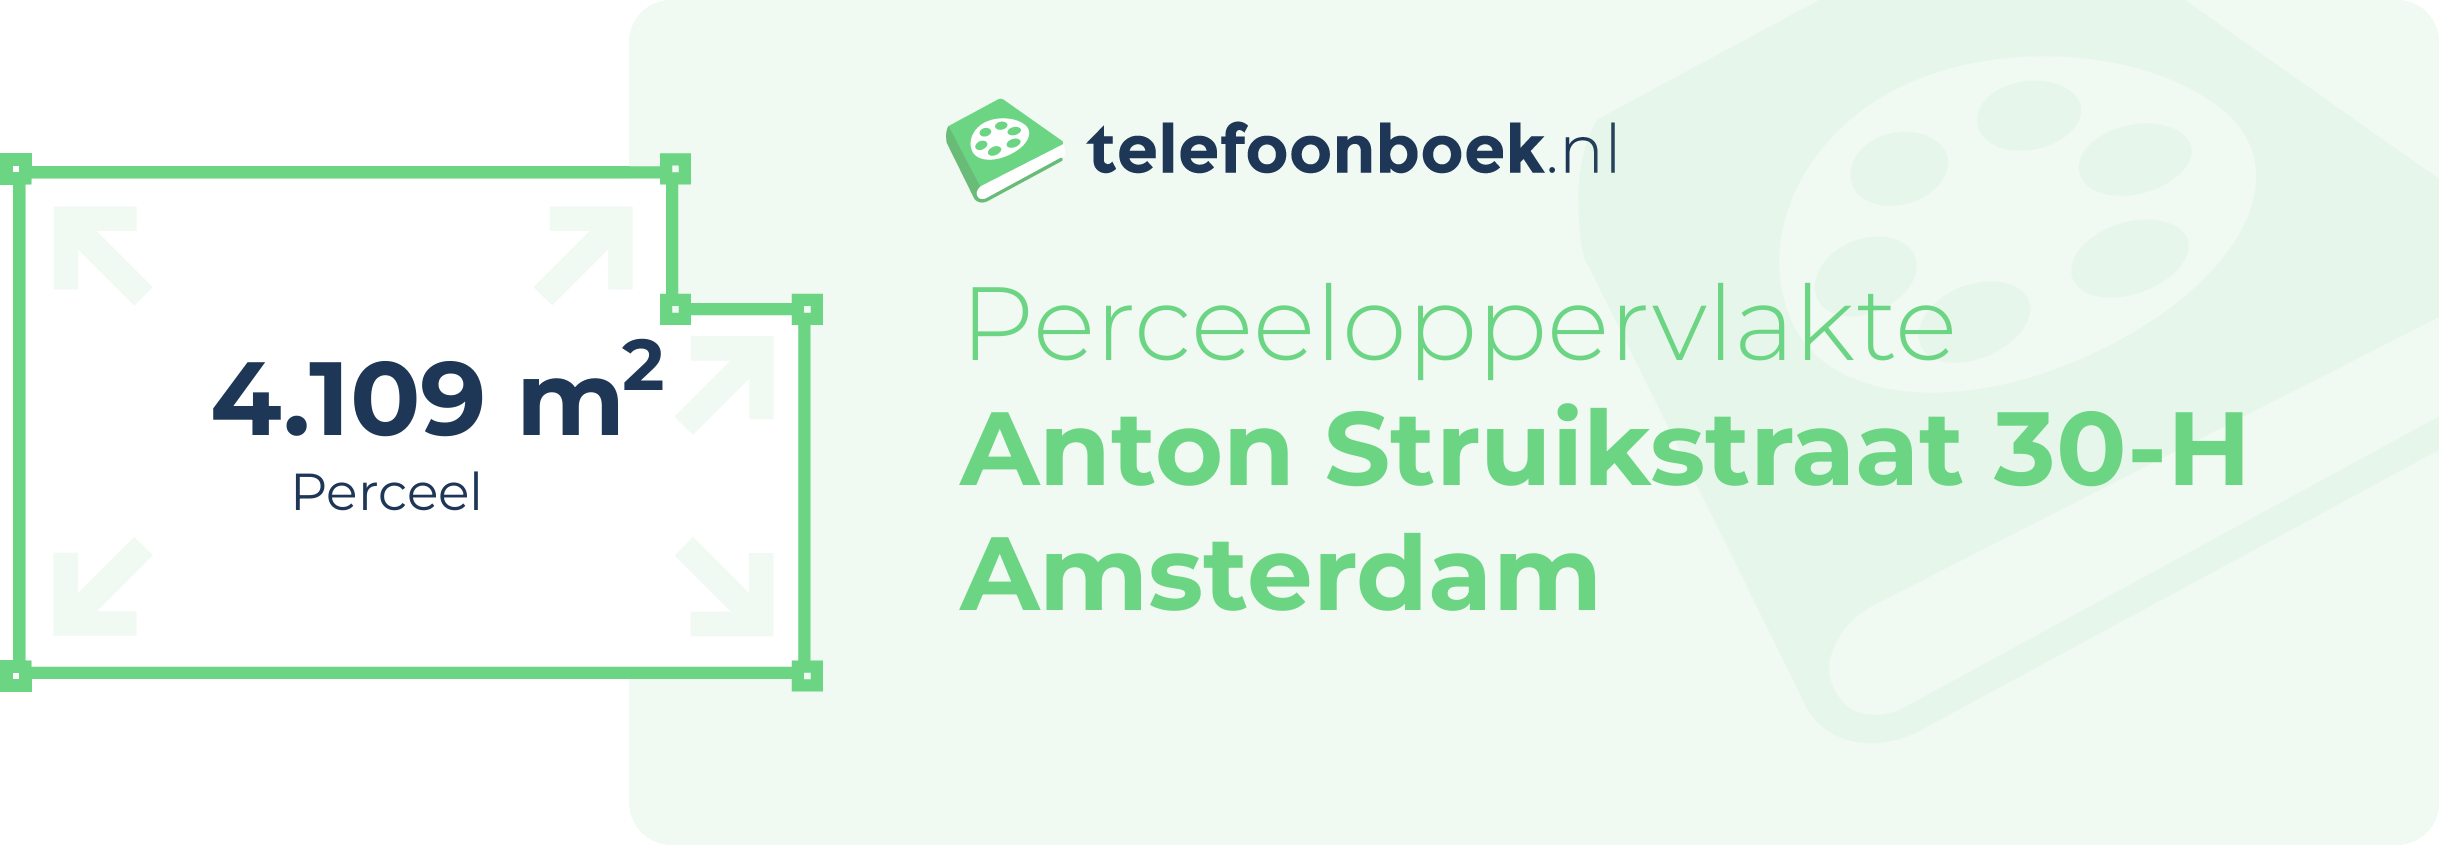 Perceeloppervlakte Anton Struikstraat 30-H Amsterdam